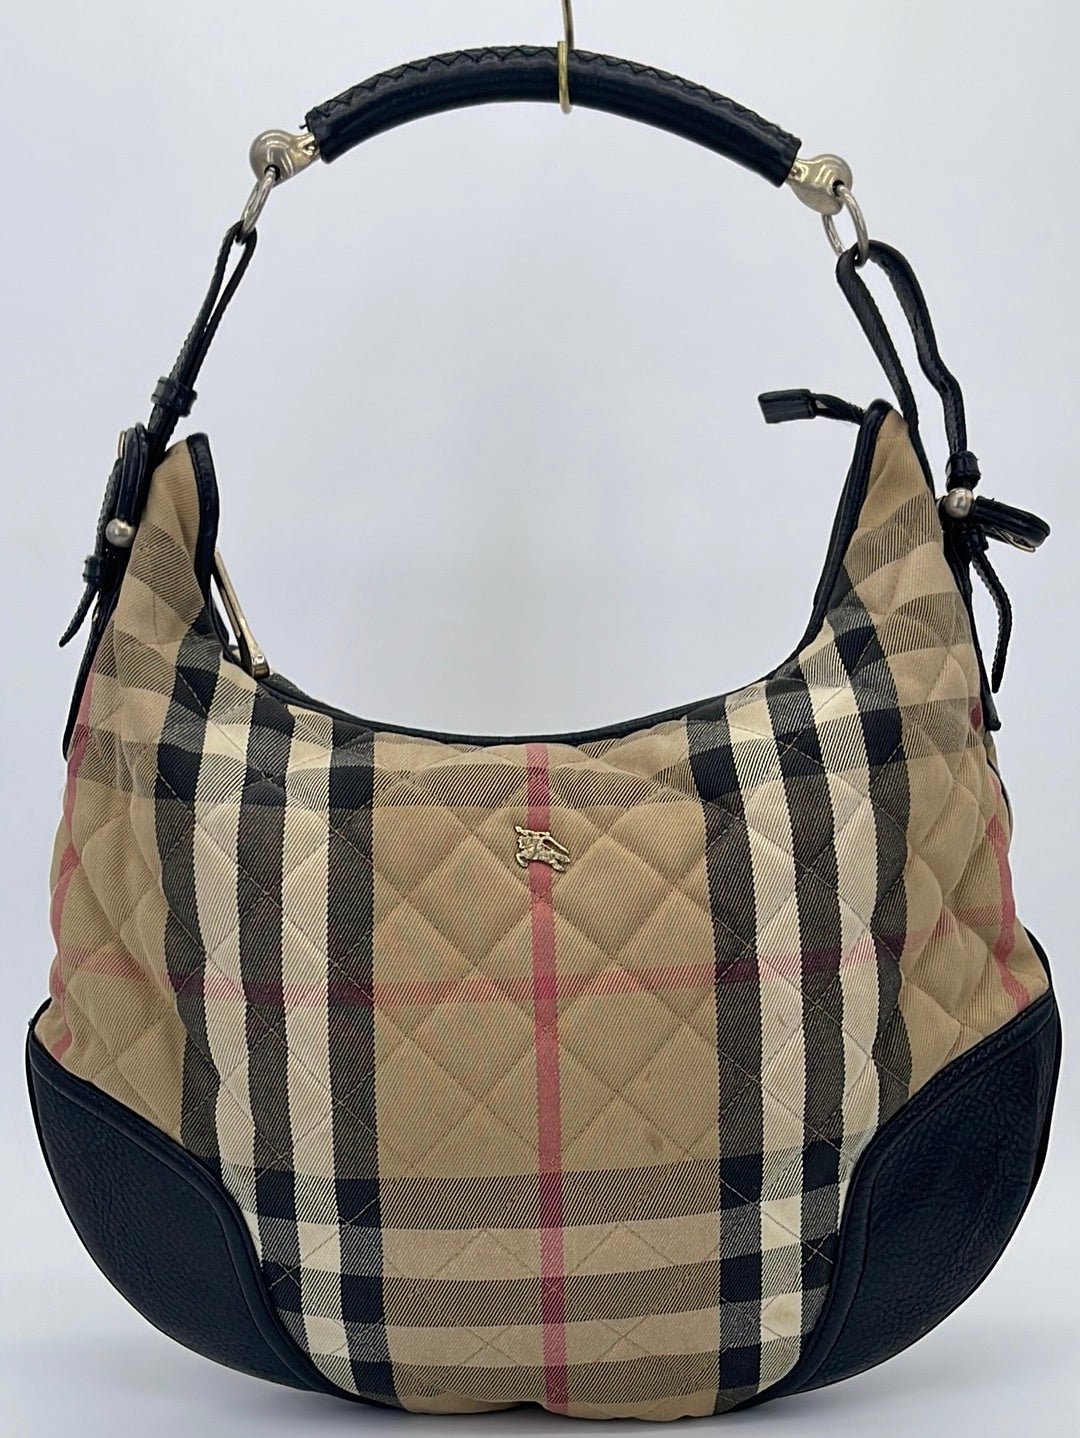 Burberry Hobo Bag Nova Check Plaid Metallic Shoulder Handbag